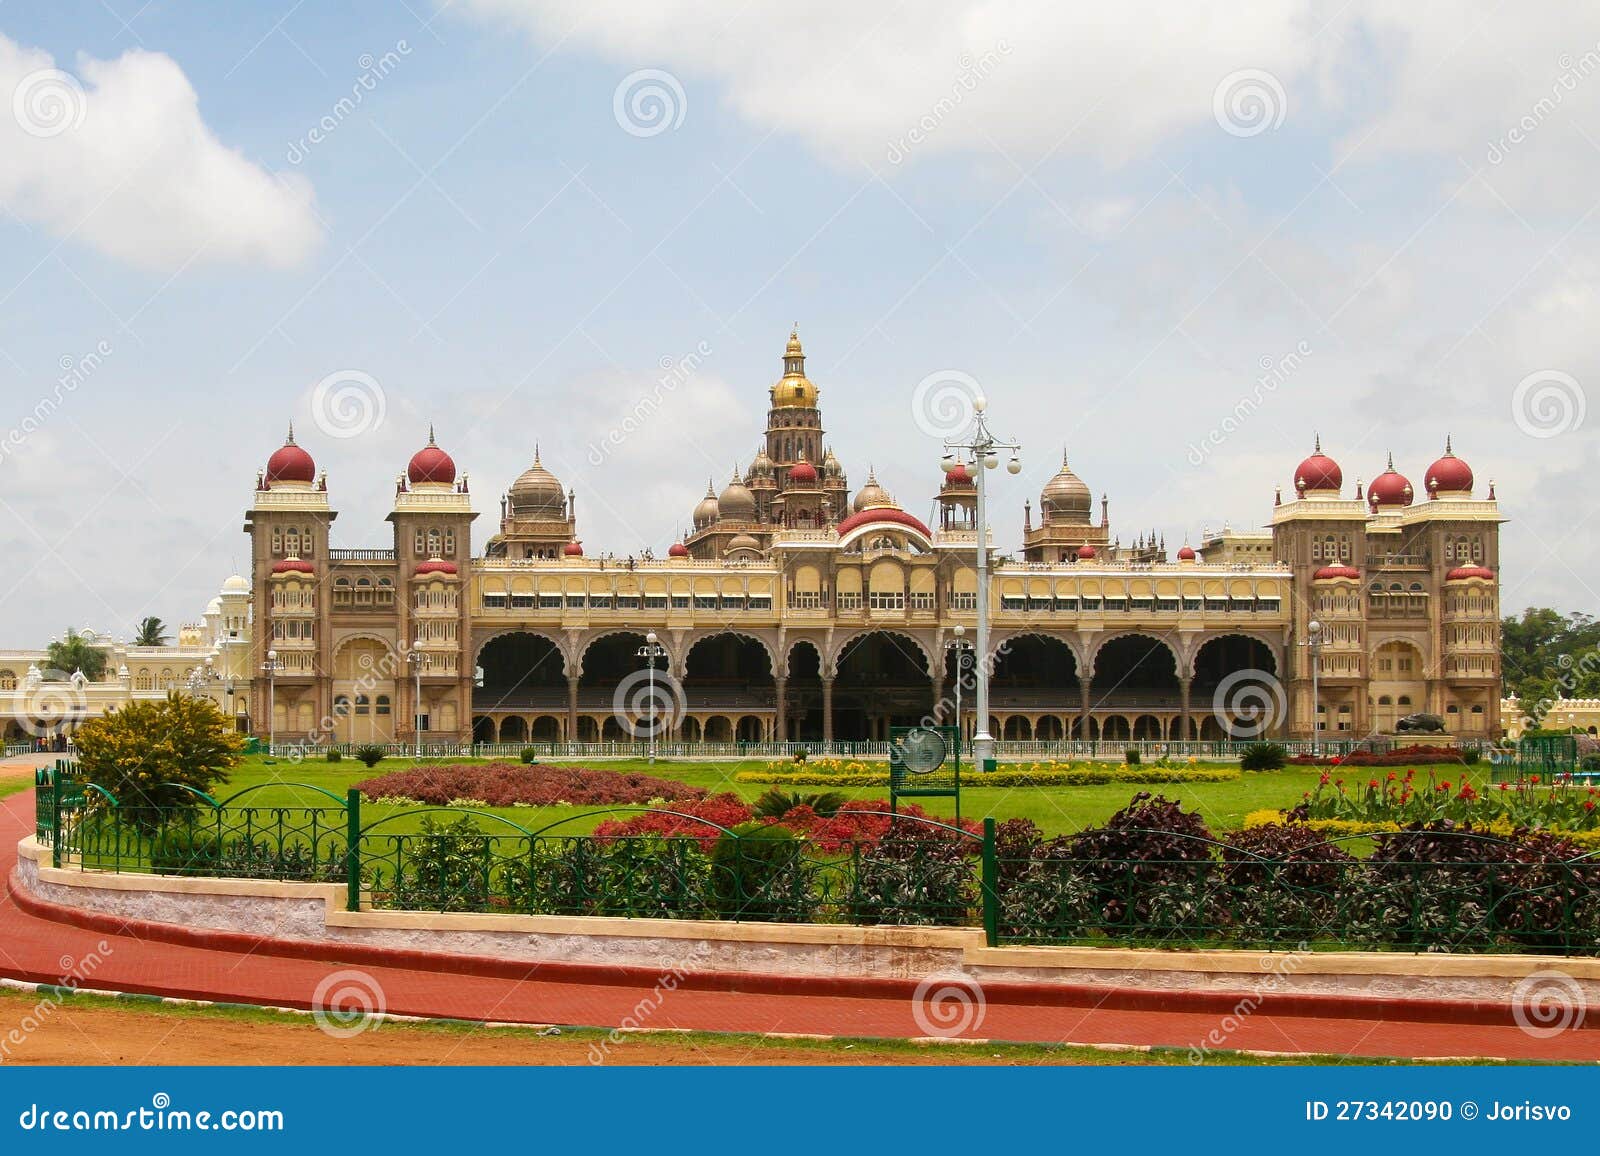 palace of mysore